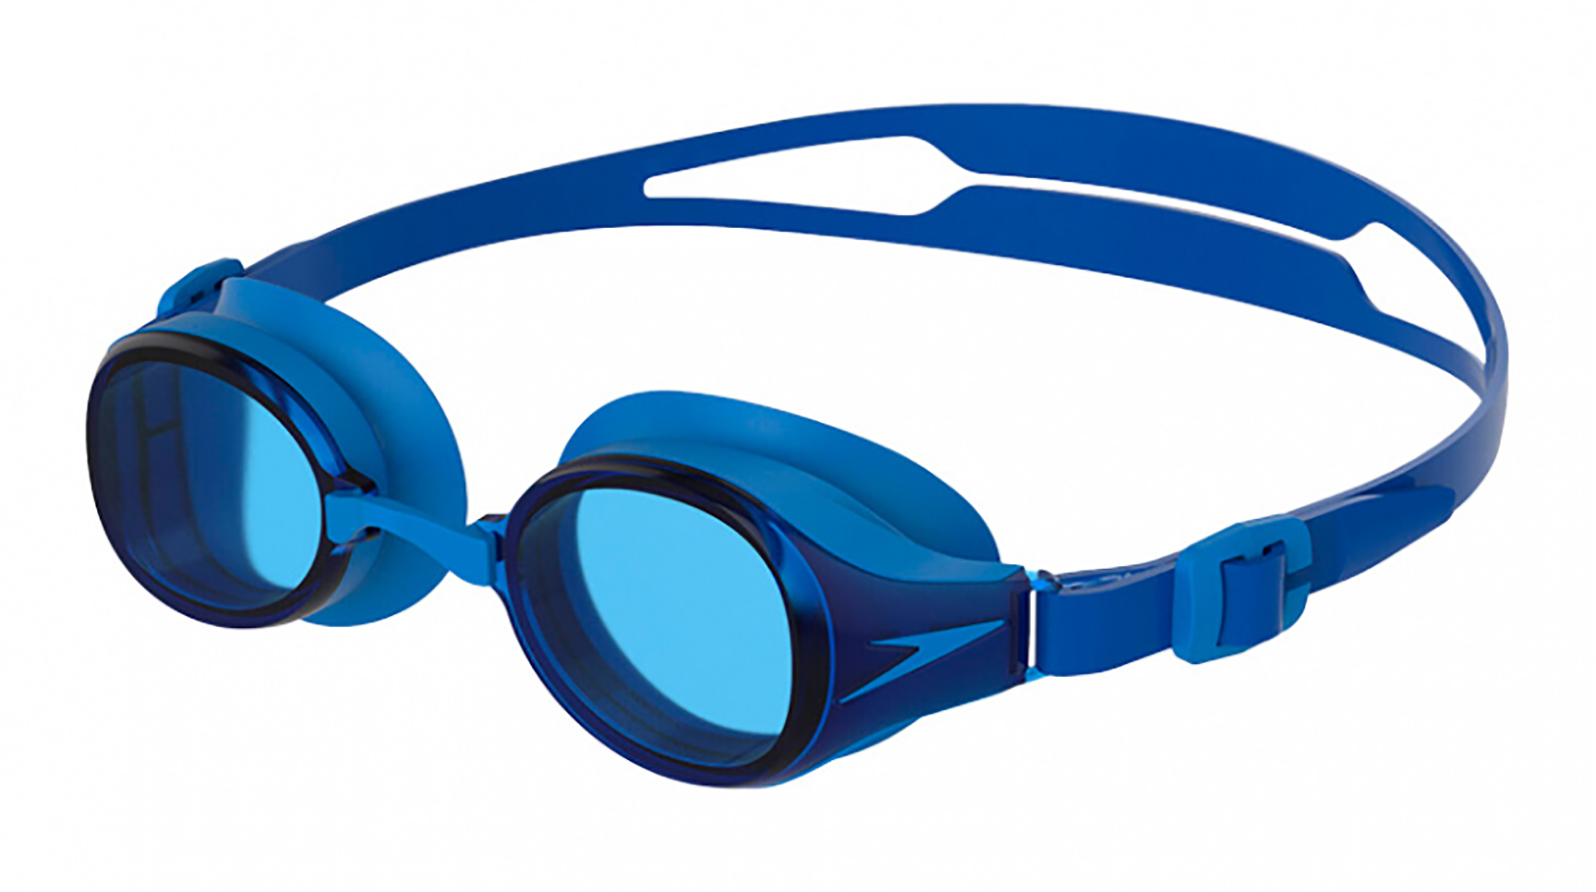 Speedo Очки для плавания Hydropure Optical F809 -5.0 speedo очки для плавания hydropure optical f809 2 5